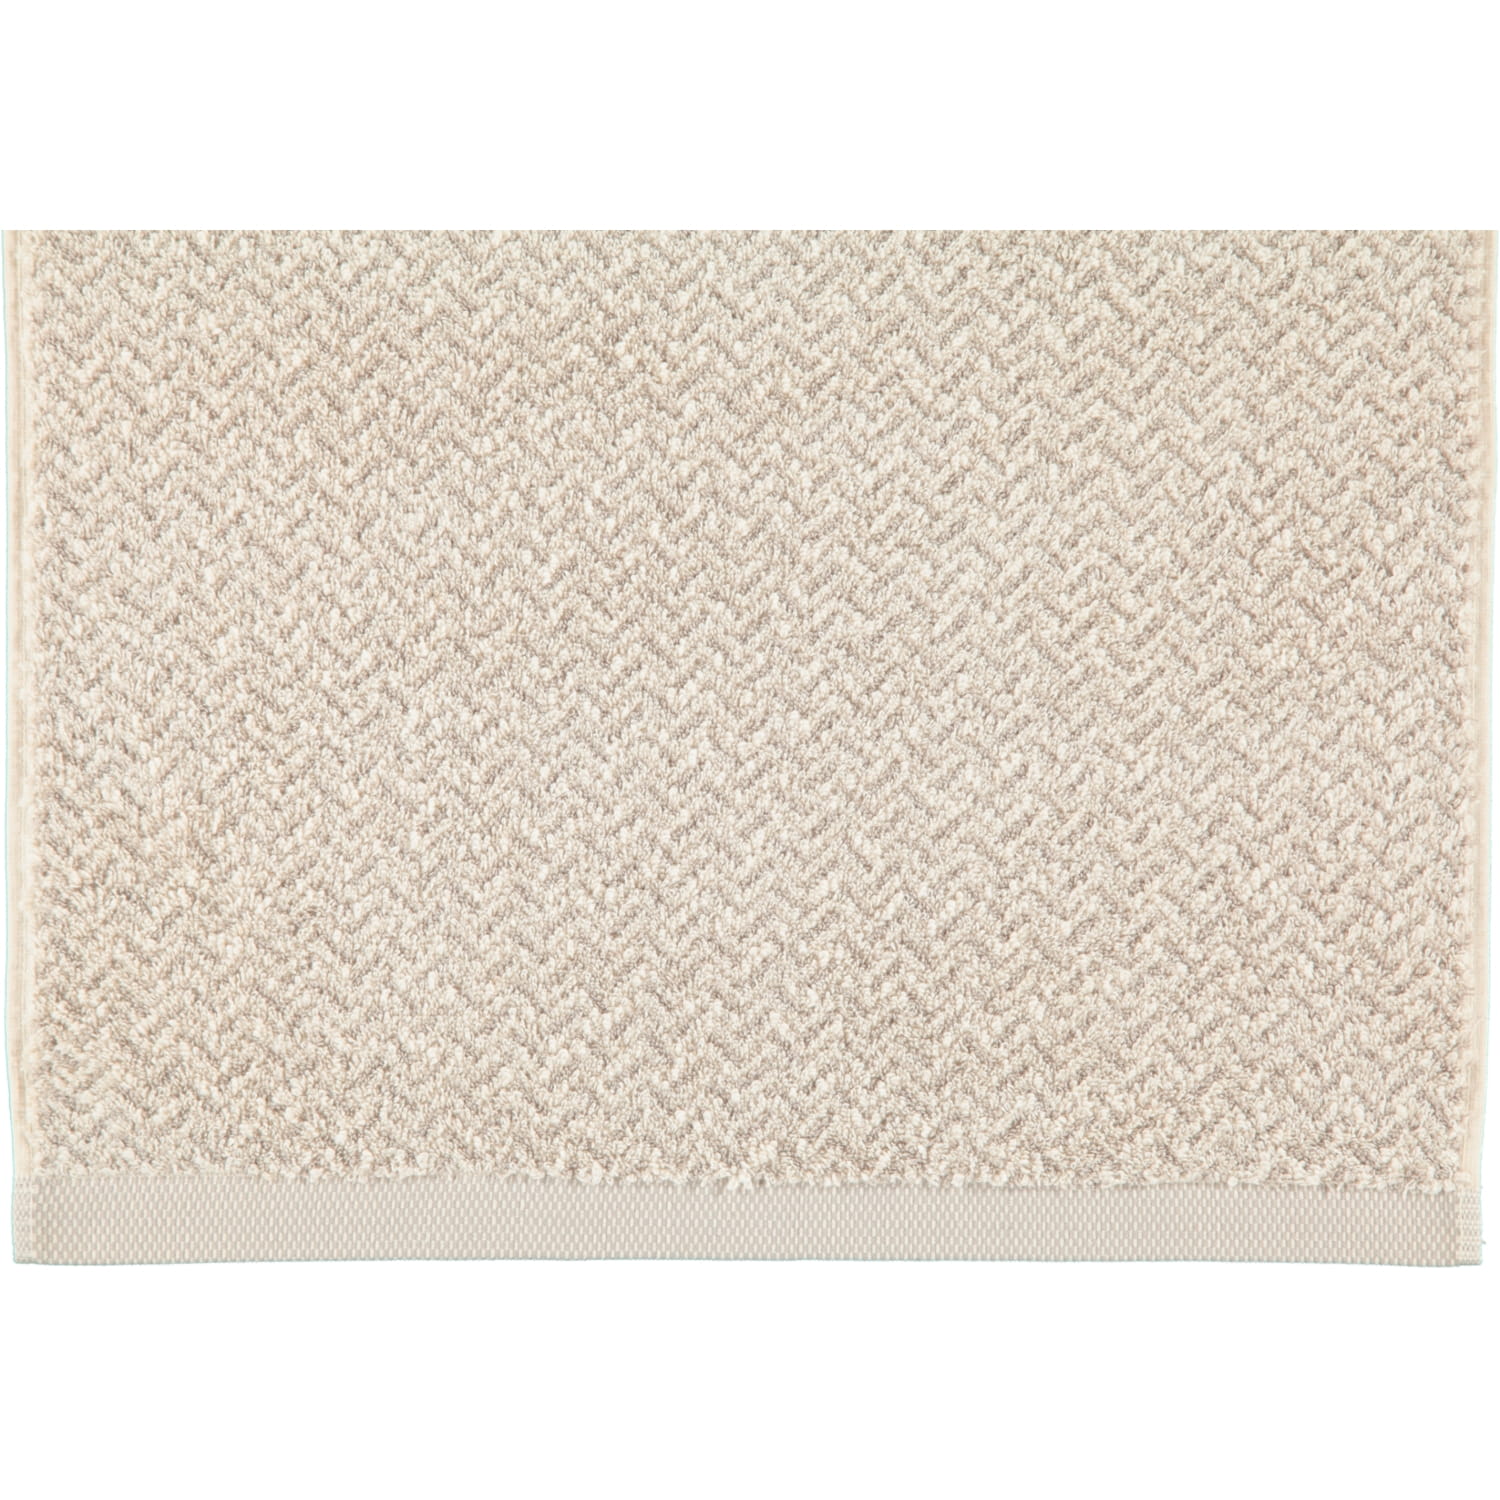 Möve - Brooklyn Fischgrat - Farbe: nature/cashmere - 071 (1-0567/8970) -  Handtuch 50x100 cm | Handtuch | Handtücher